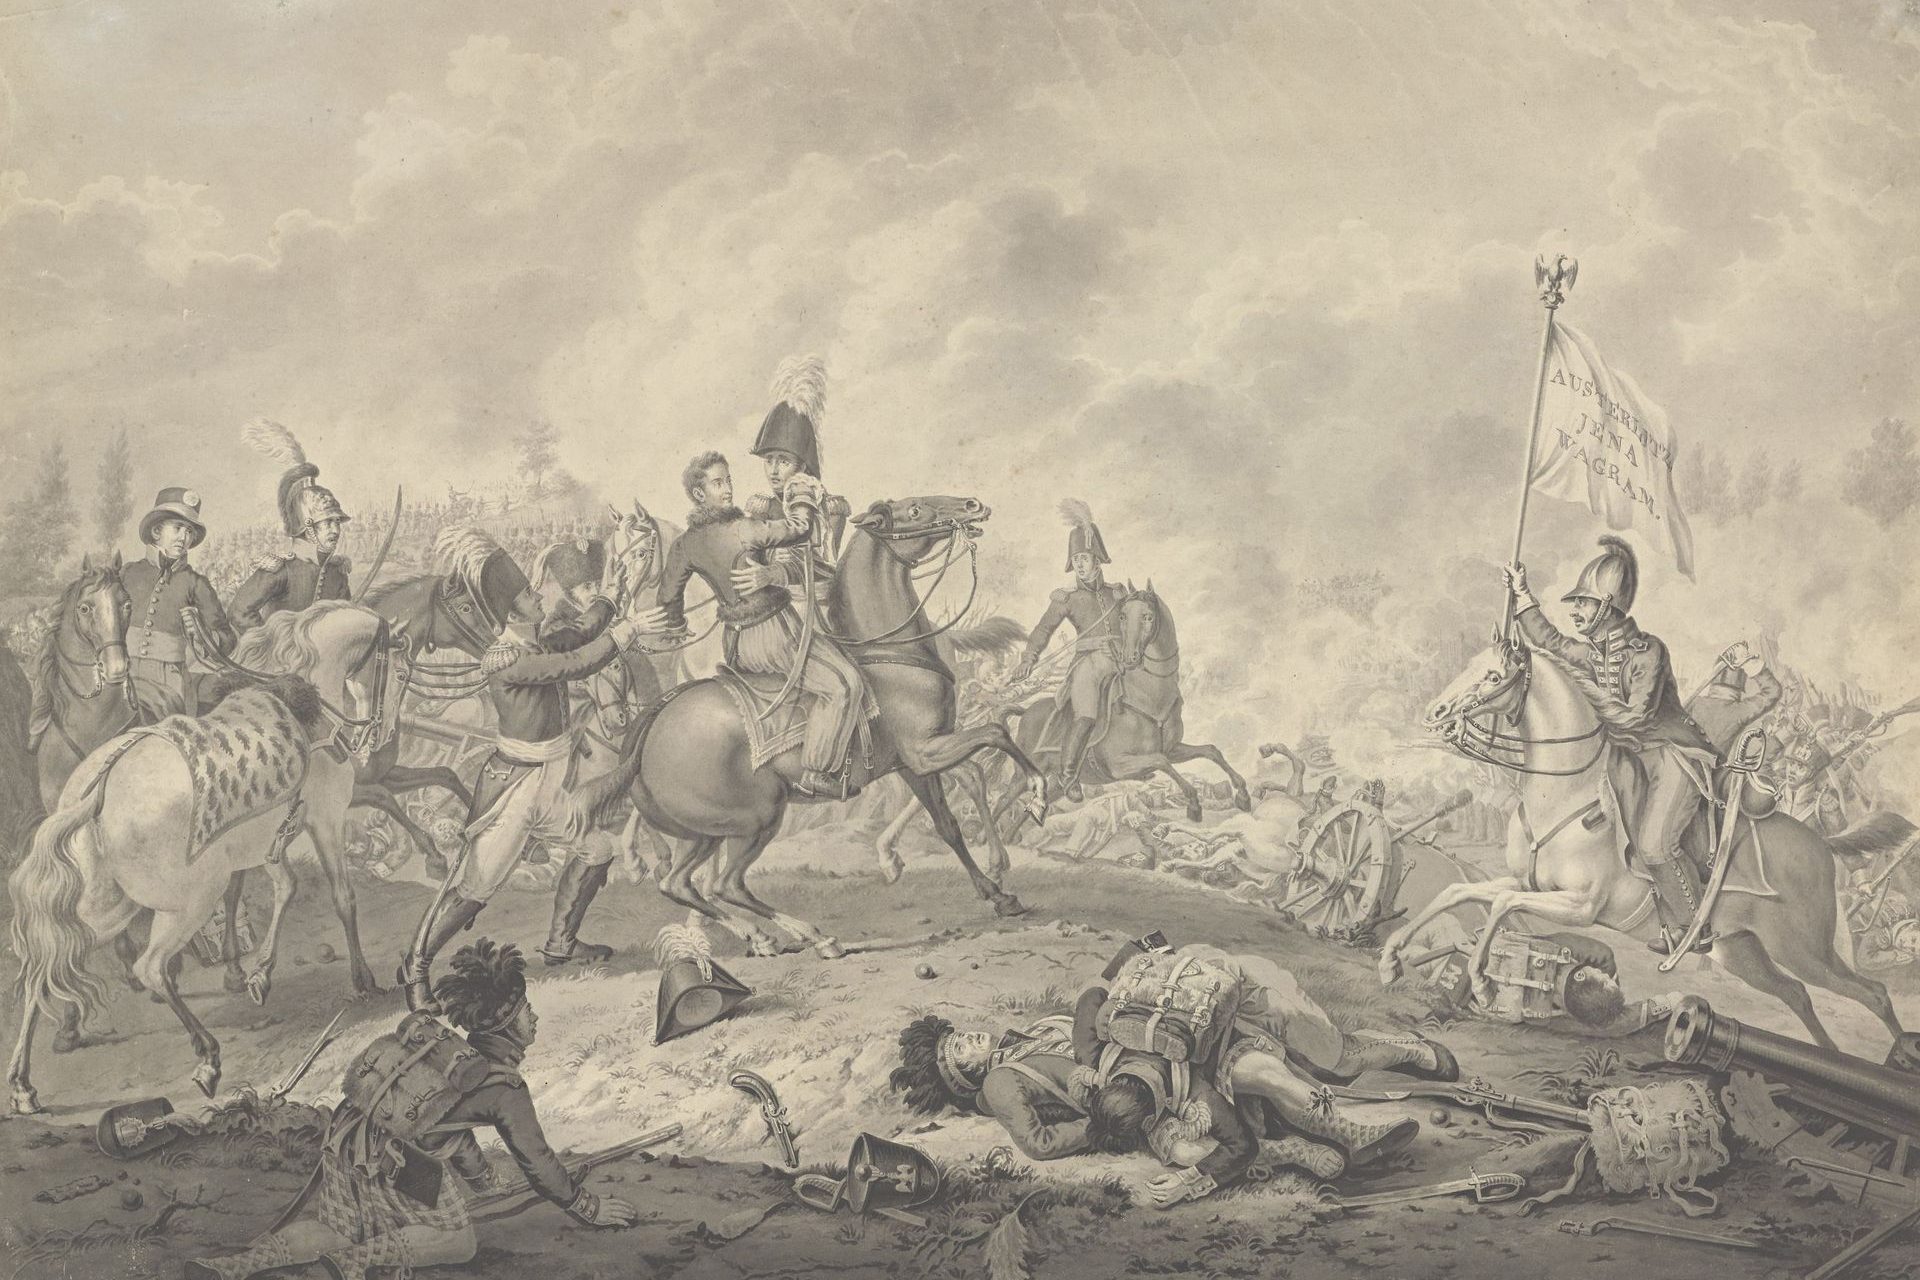 1815: the finale in Waterloo